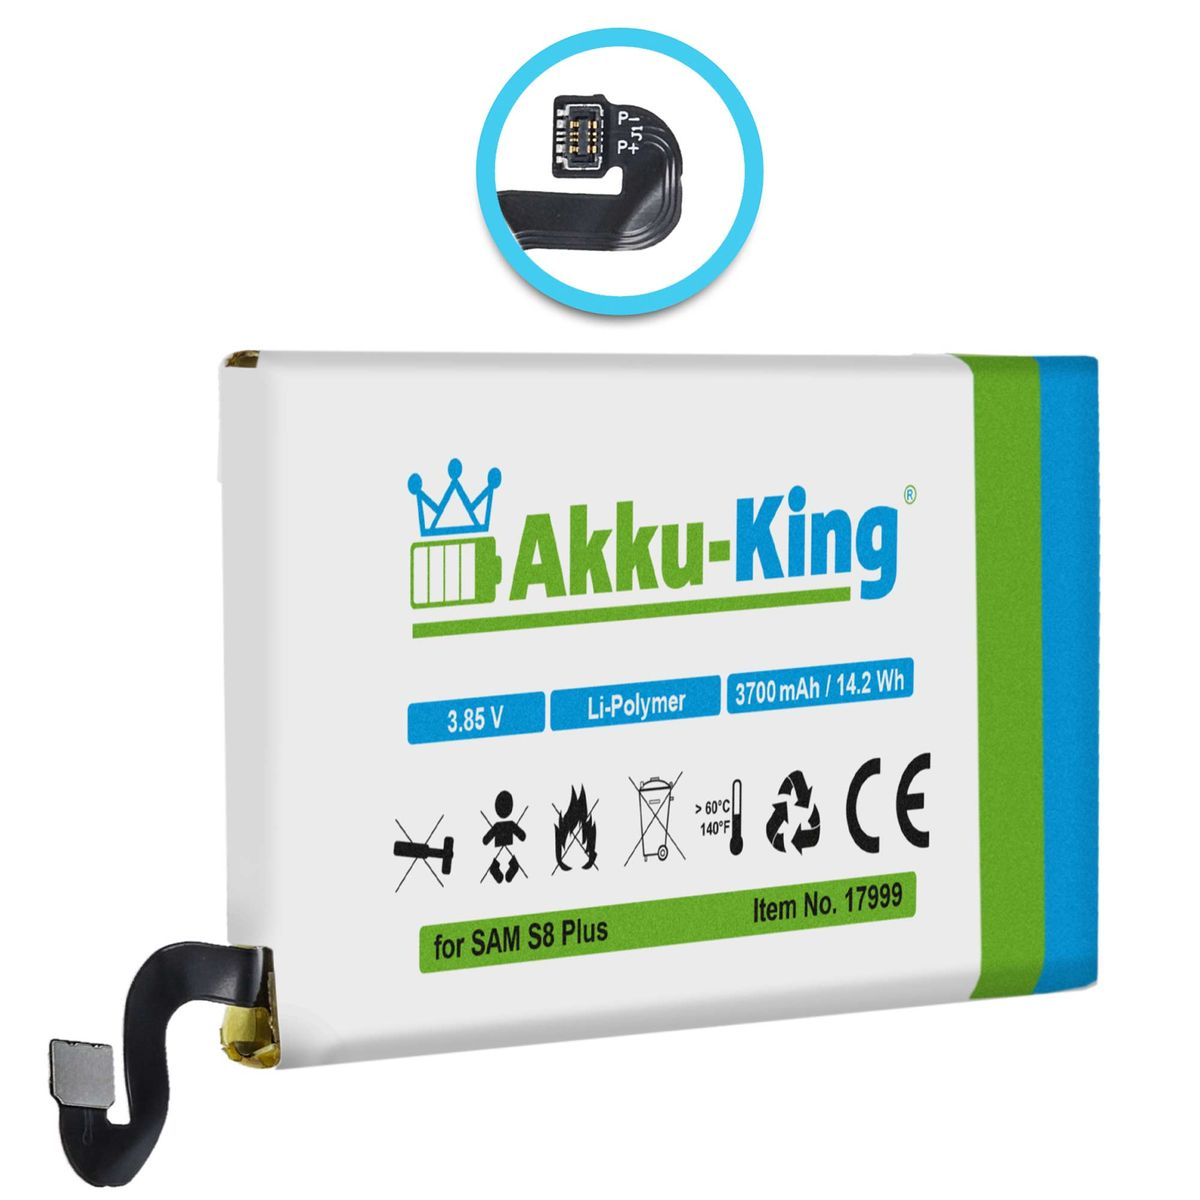 AKKU-KING Akku kompatibel mit Samsung Volt, 3.85 Li-Polymer EB-BG955ABE 3700mAh Handy-Akku